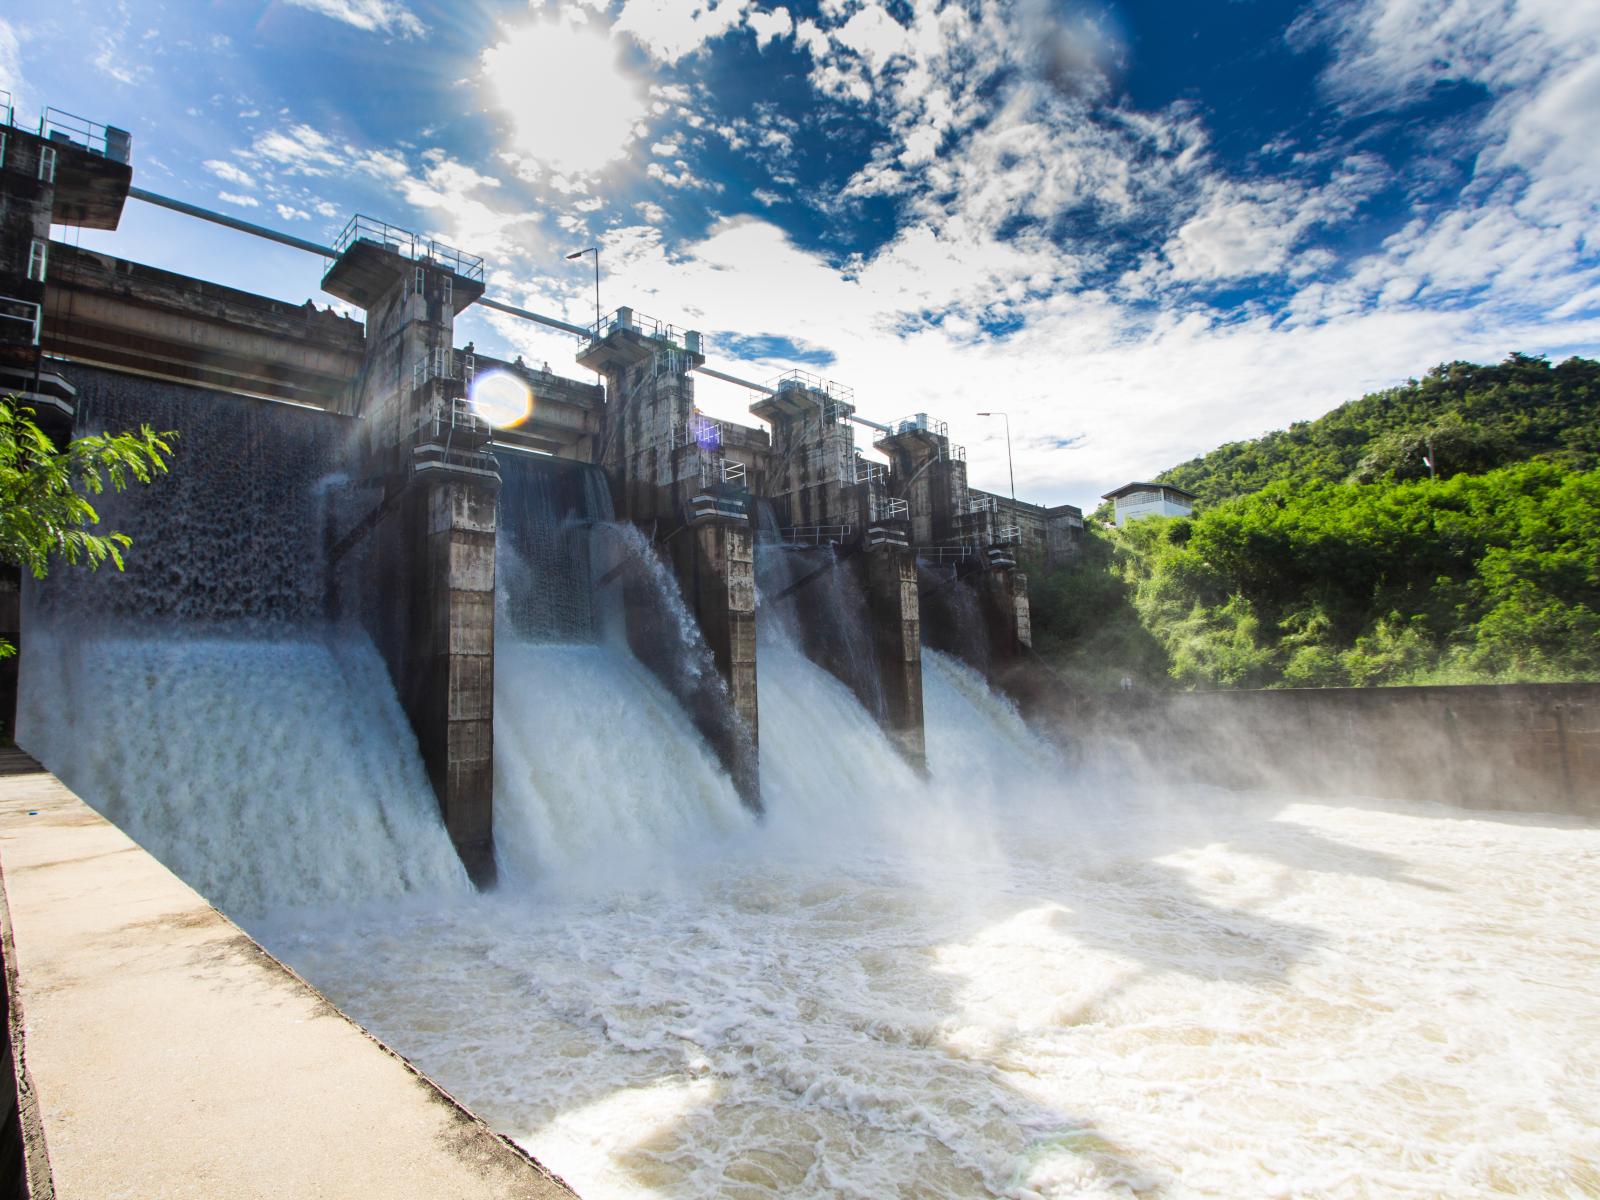 Dam with open floodgates